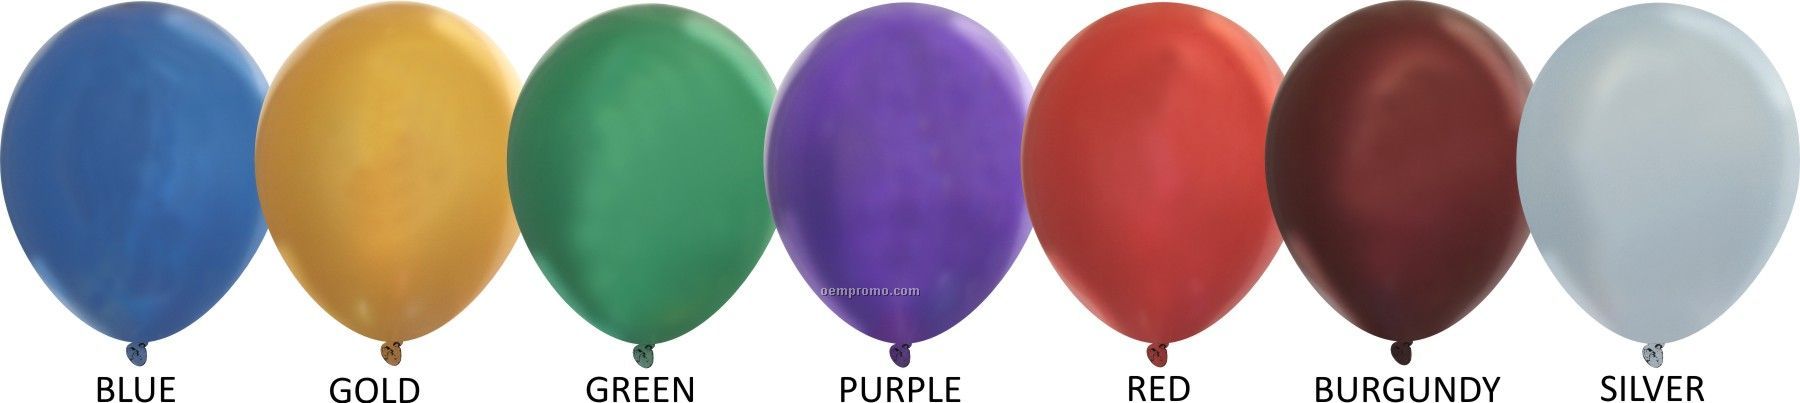 Unimprinted Metallic Latex Balloons (11")